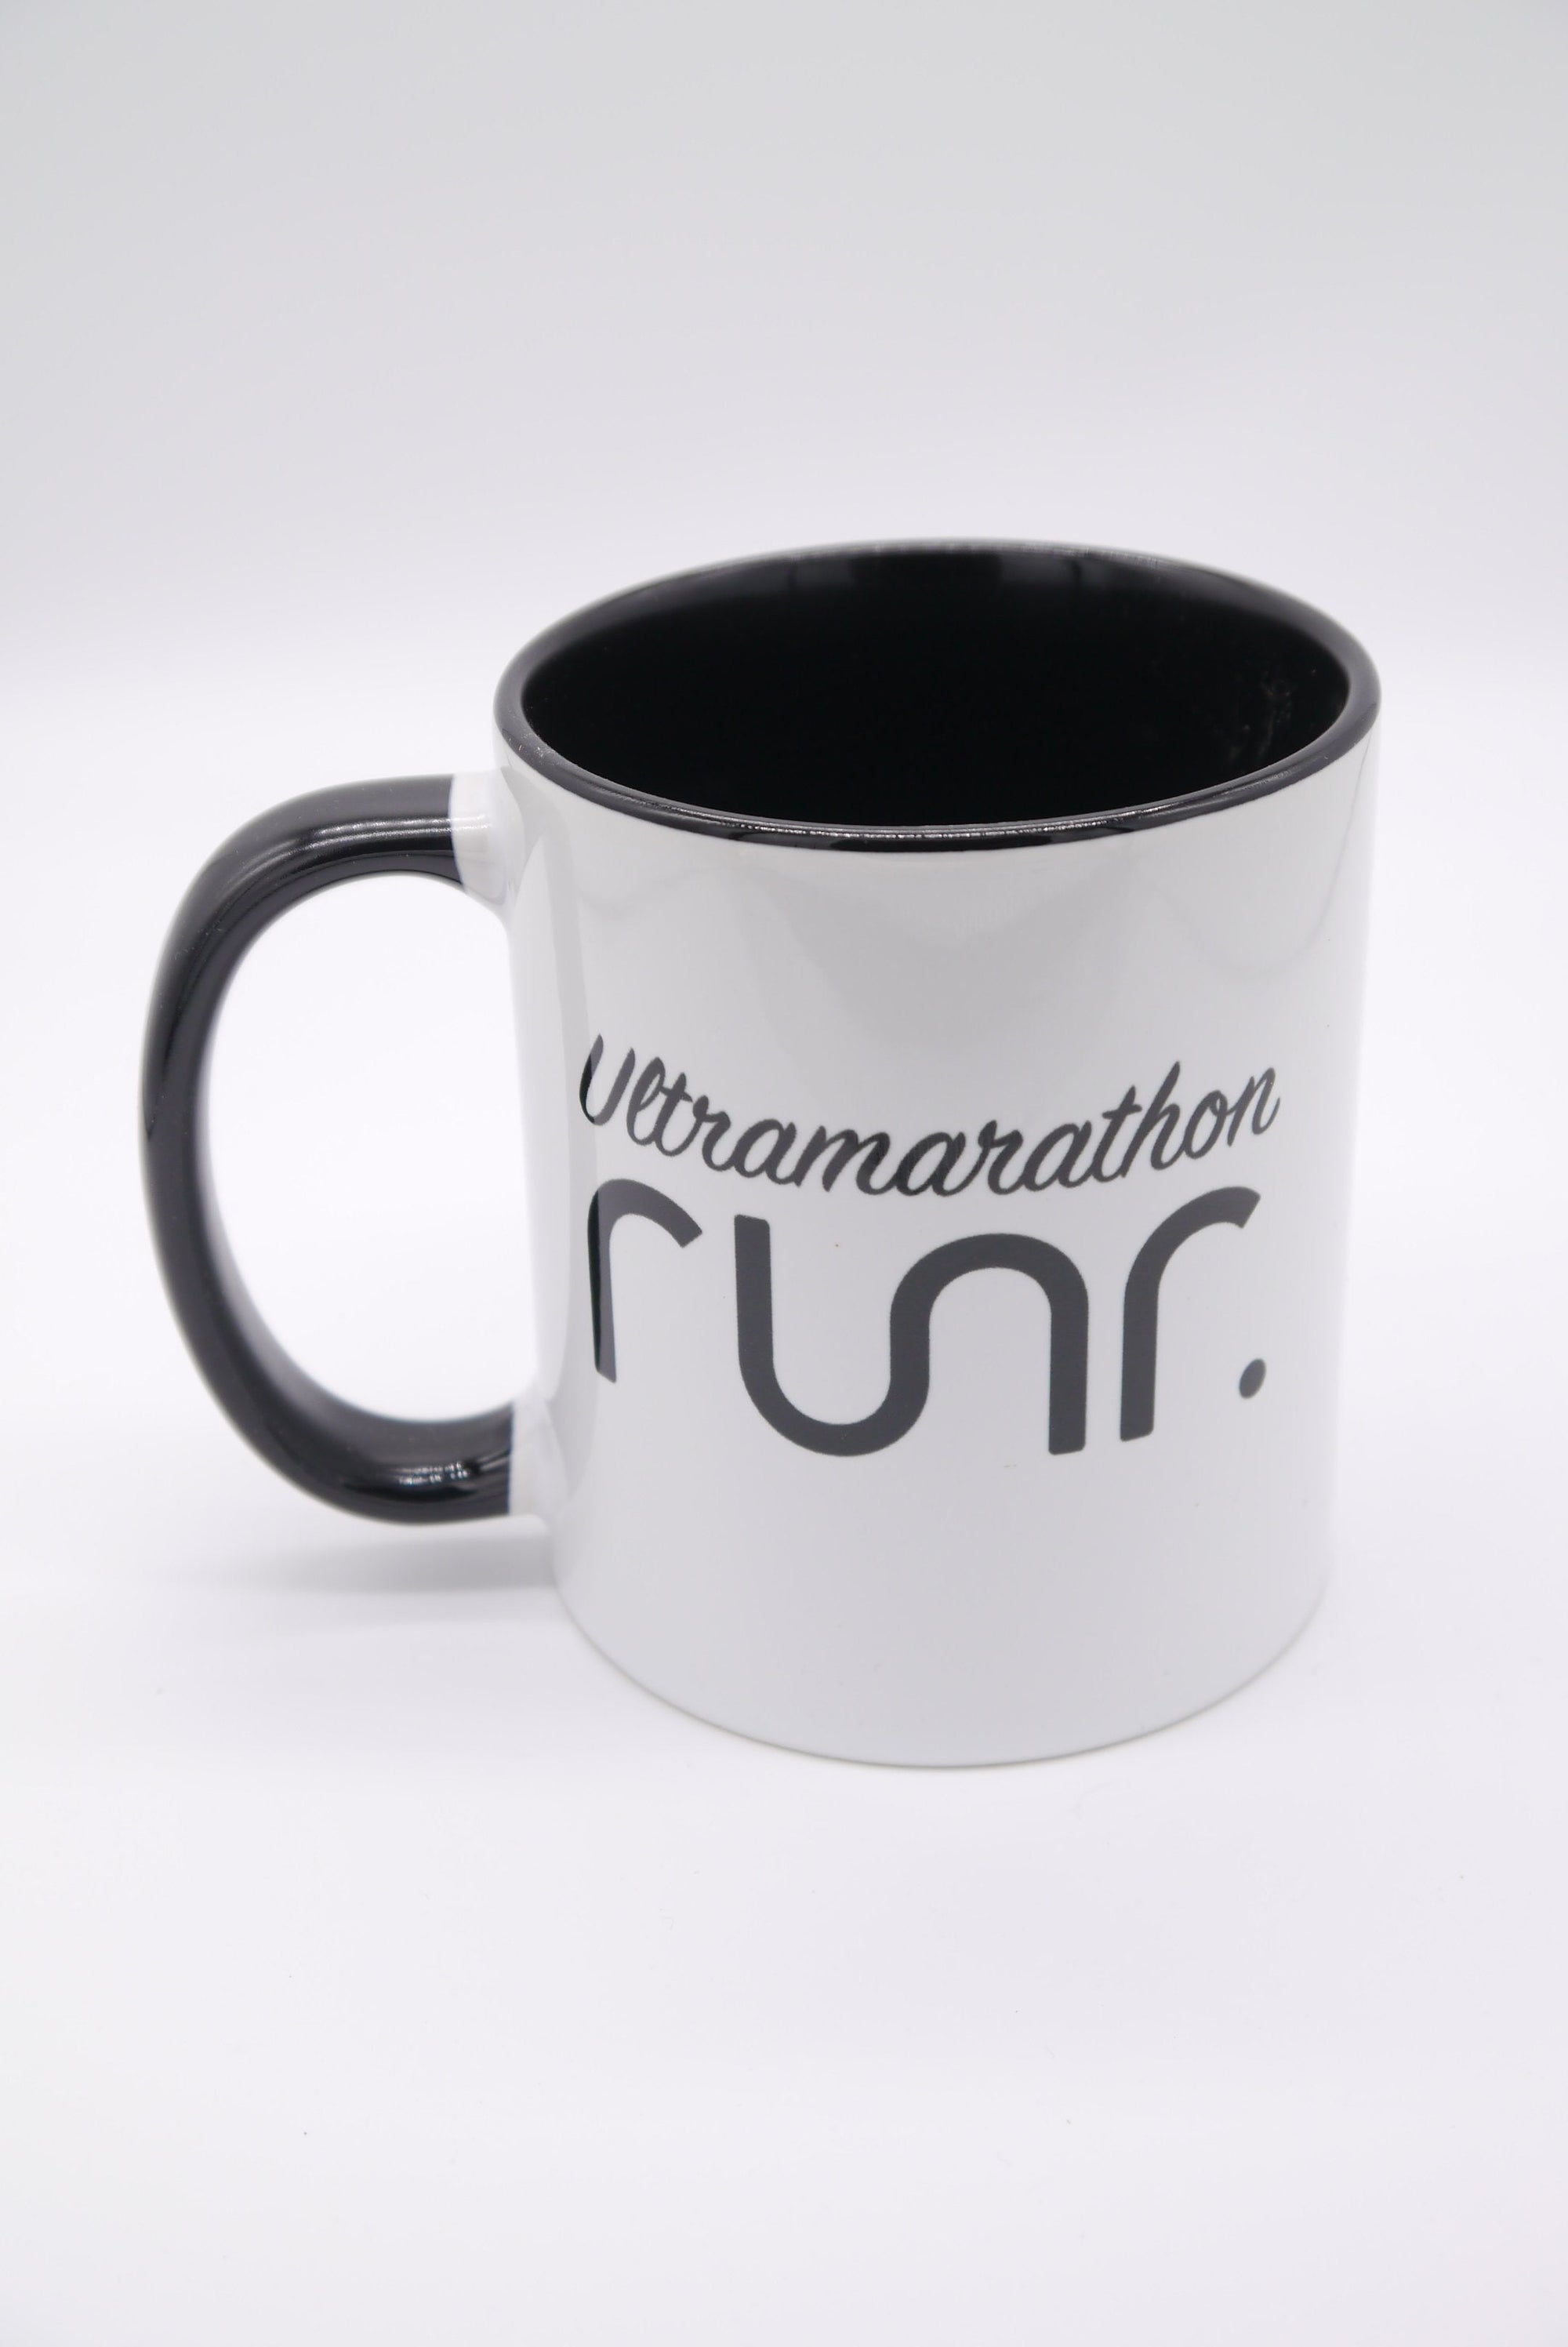 Ultramarathon Runr Mug in black